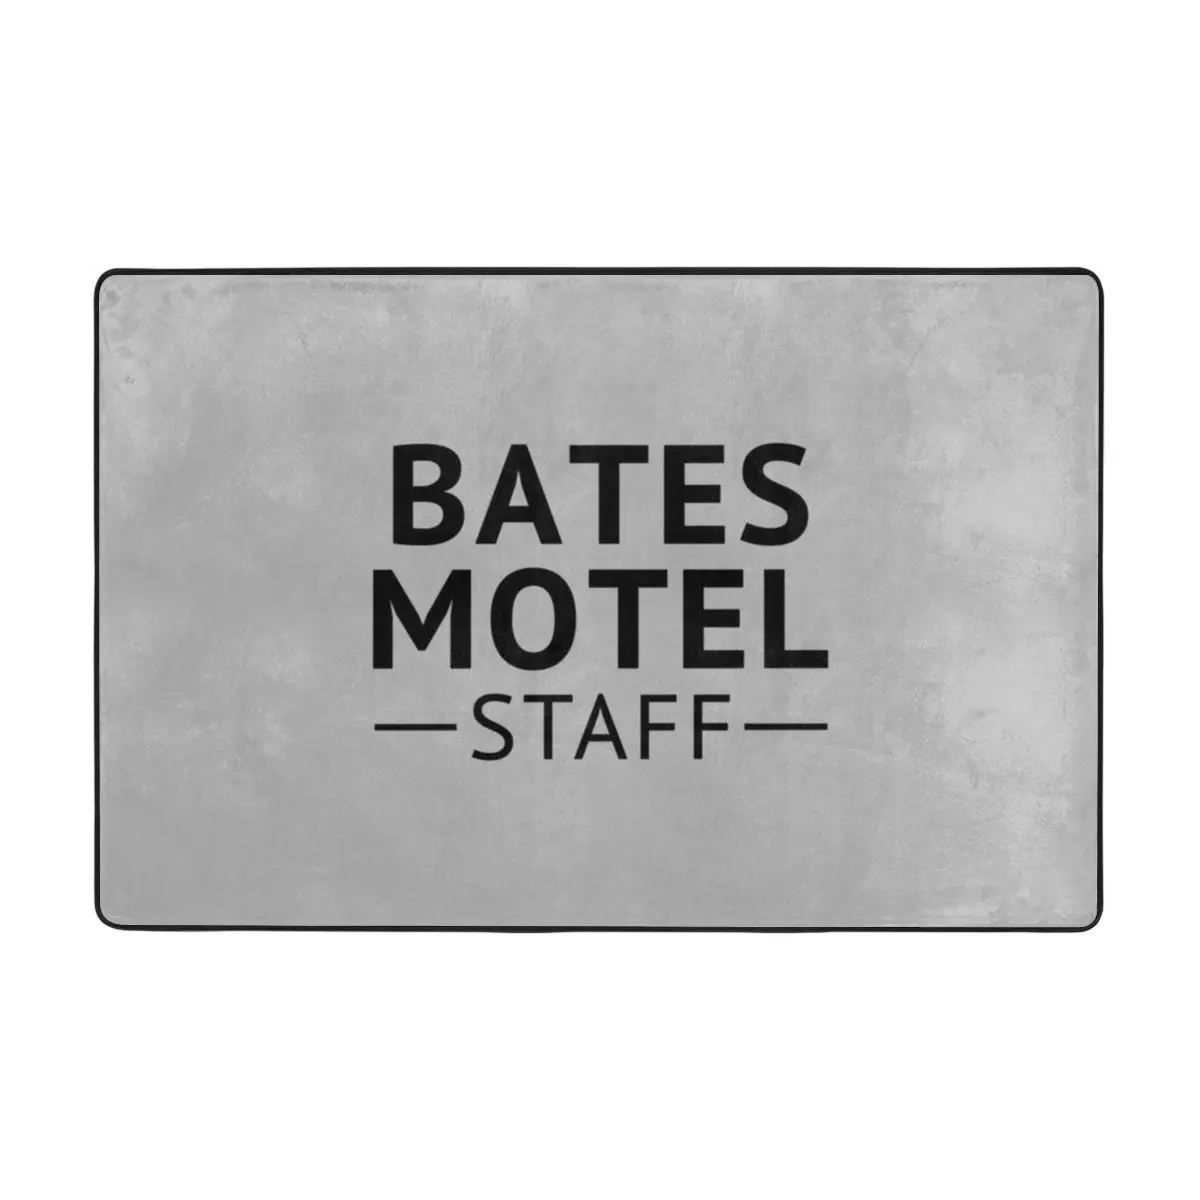 

Bates Motel Employee Doormat Carpet Mat Rug Polyester Anti-slip Floor Decor Bath Bathroom Kitchen Living Room 60x90